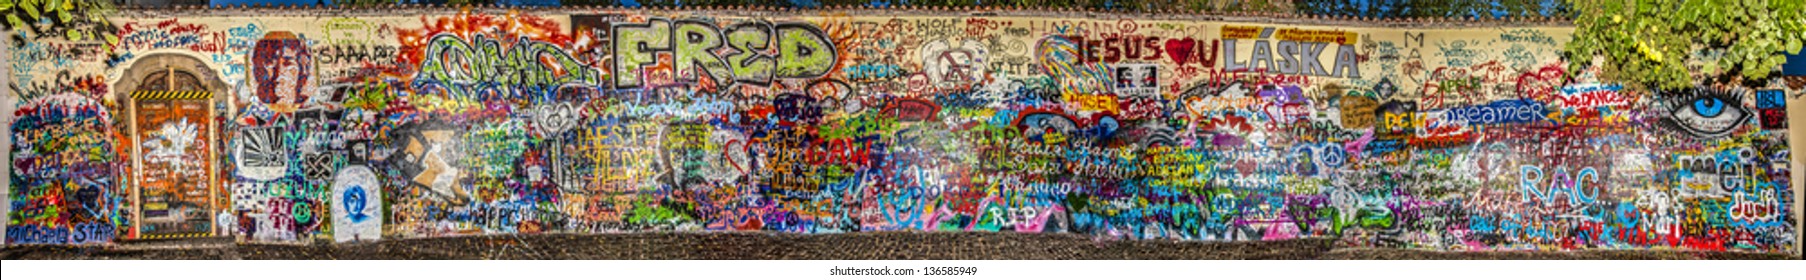 Lennon Wall Hd Stock Images Shutterstock